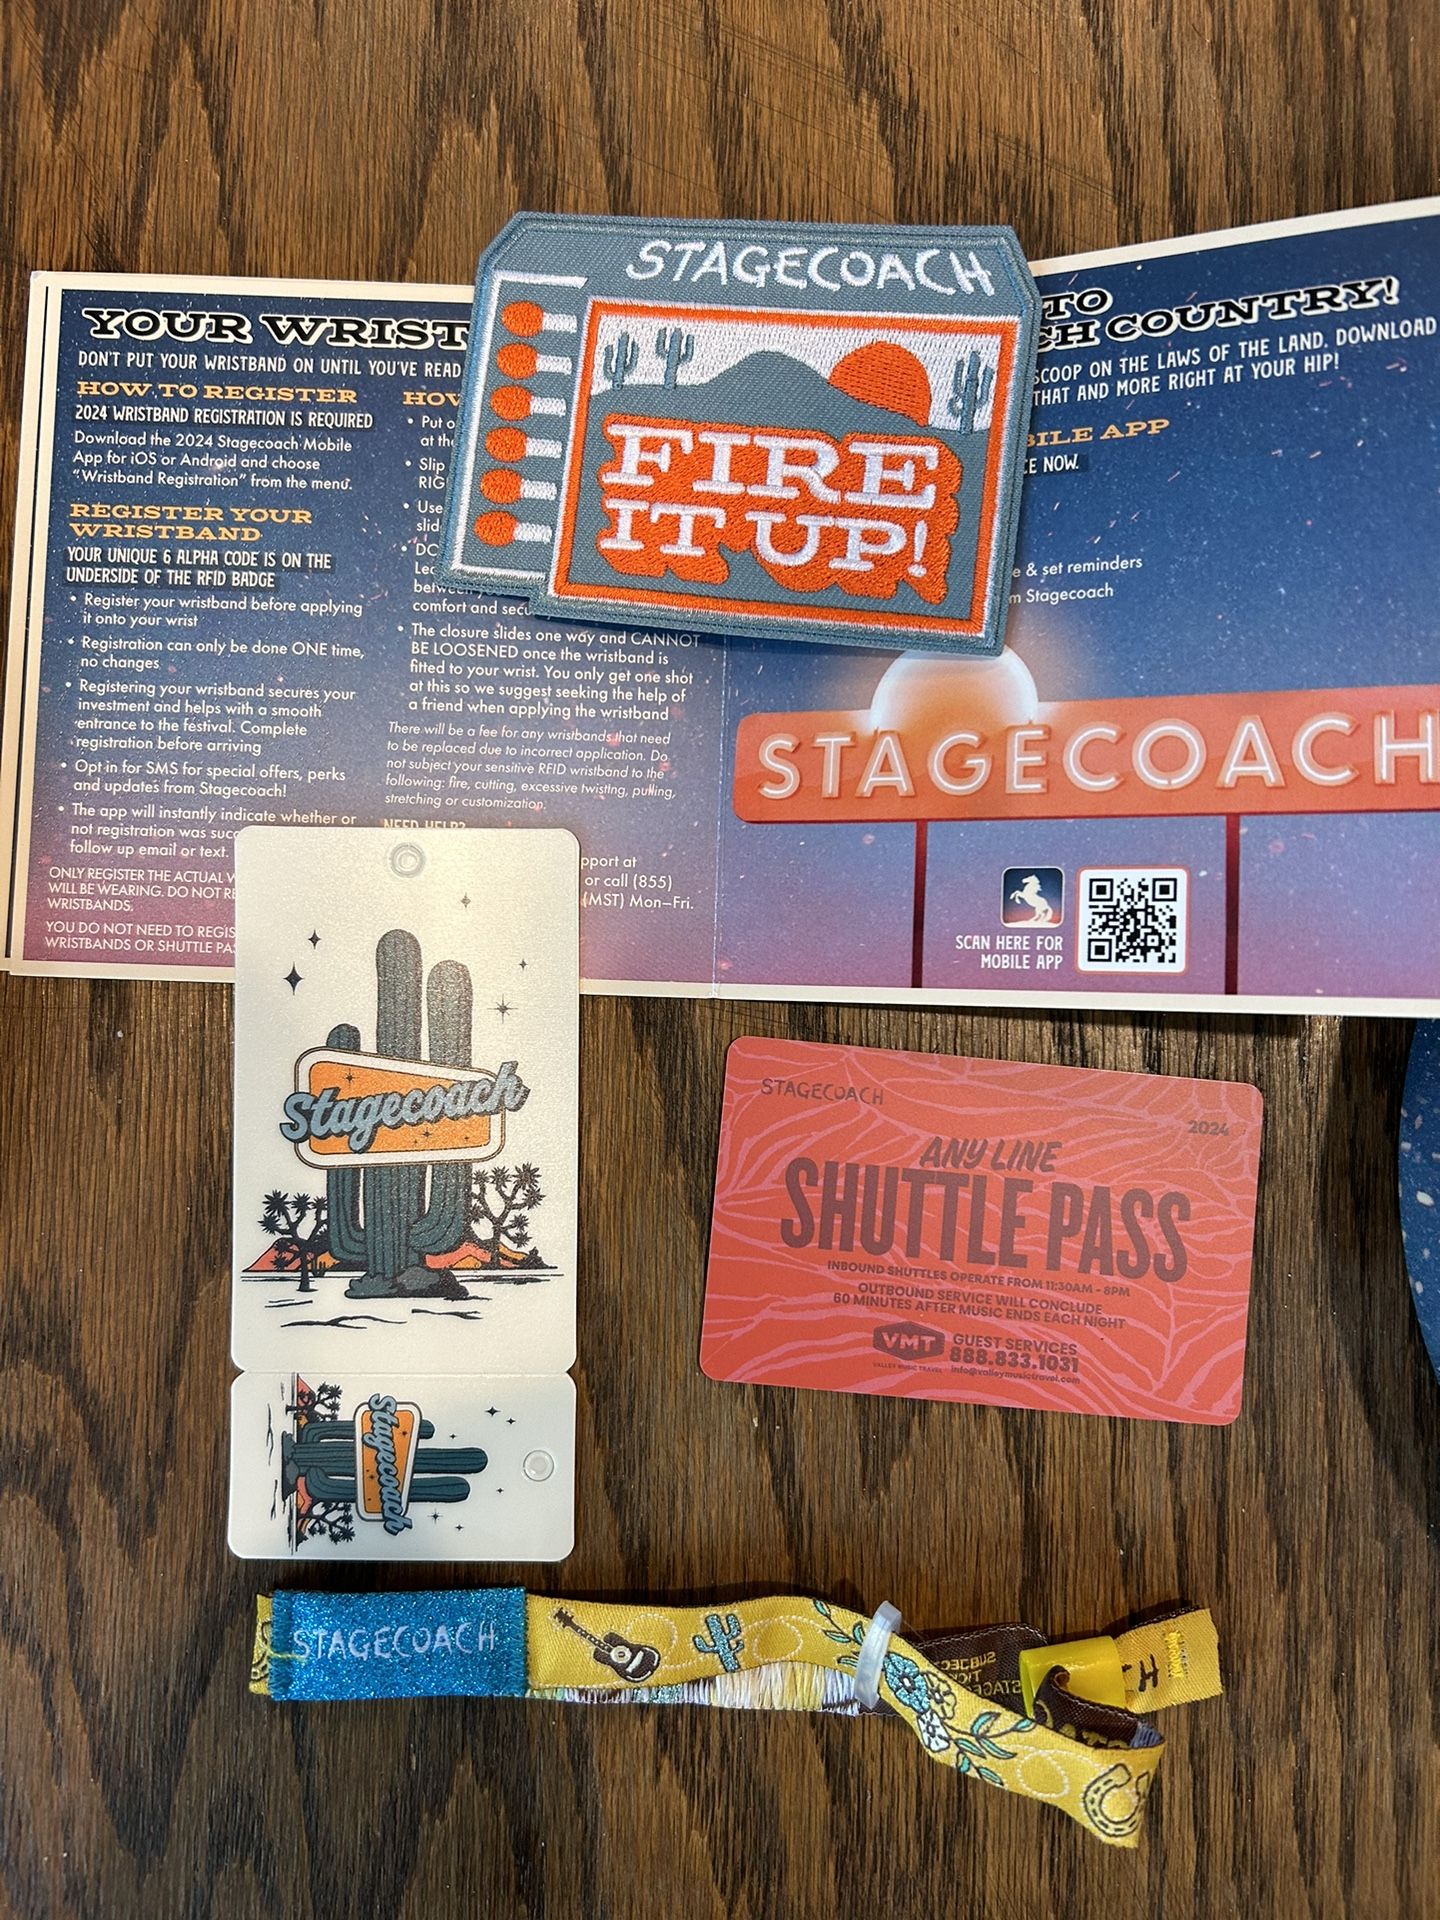 Stagecoach 3-Day GA w/ Shuttle pass!